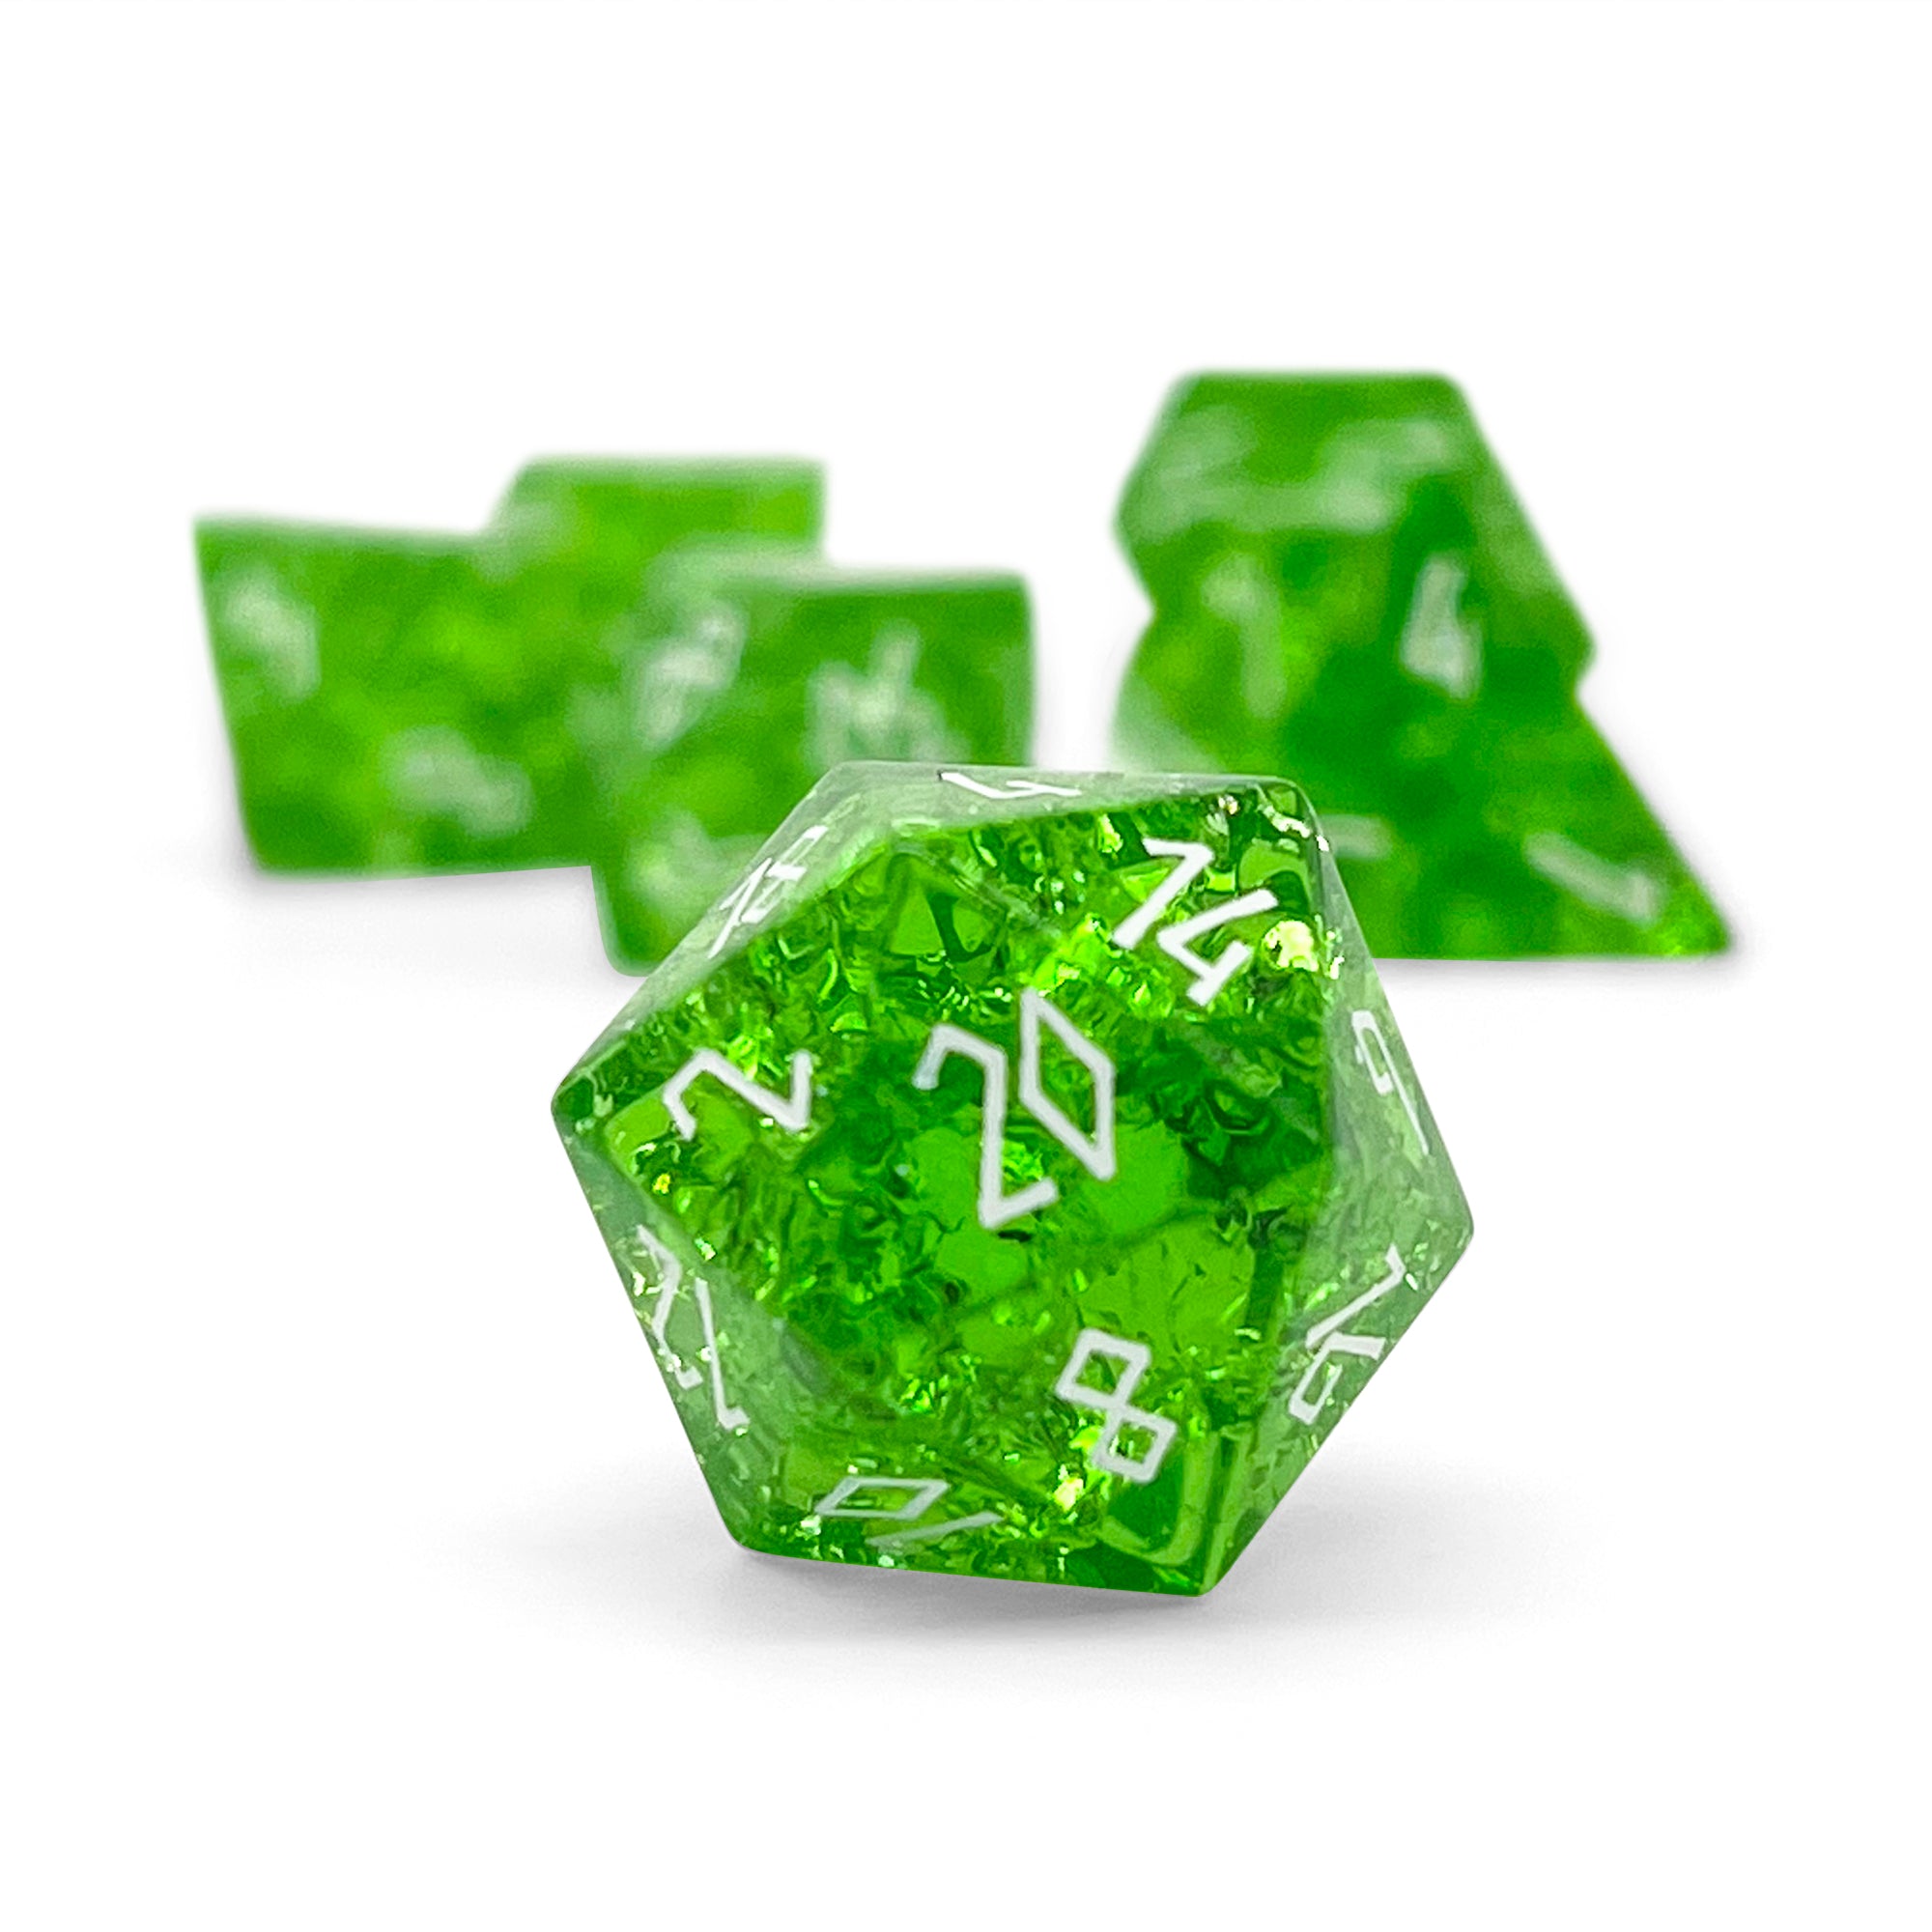 Shattered Zircon Emerald - White Font 7 Piece RPG Set Zircon Glass Dice